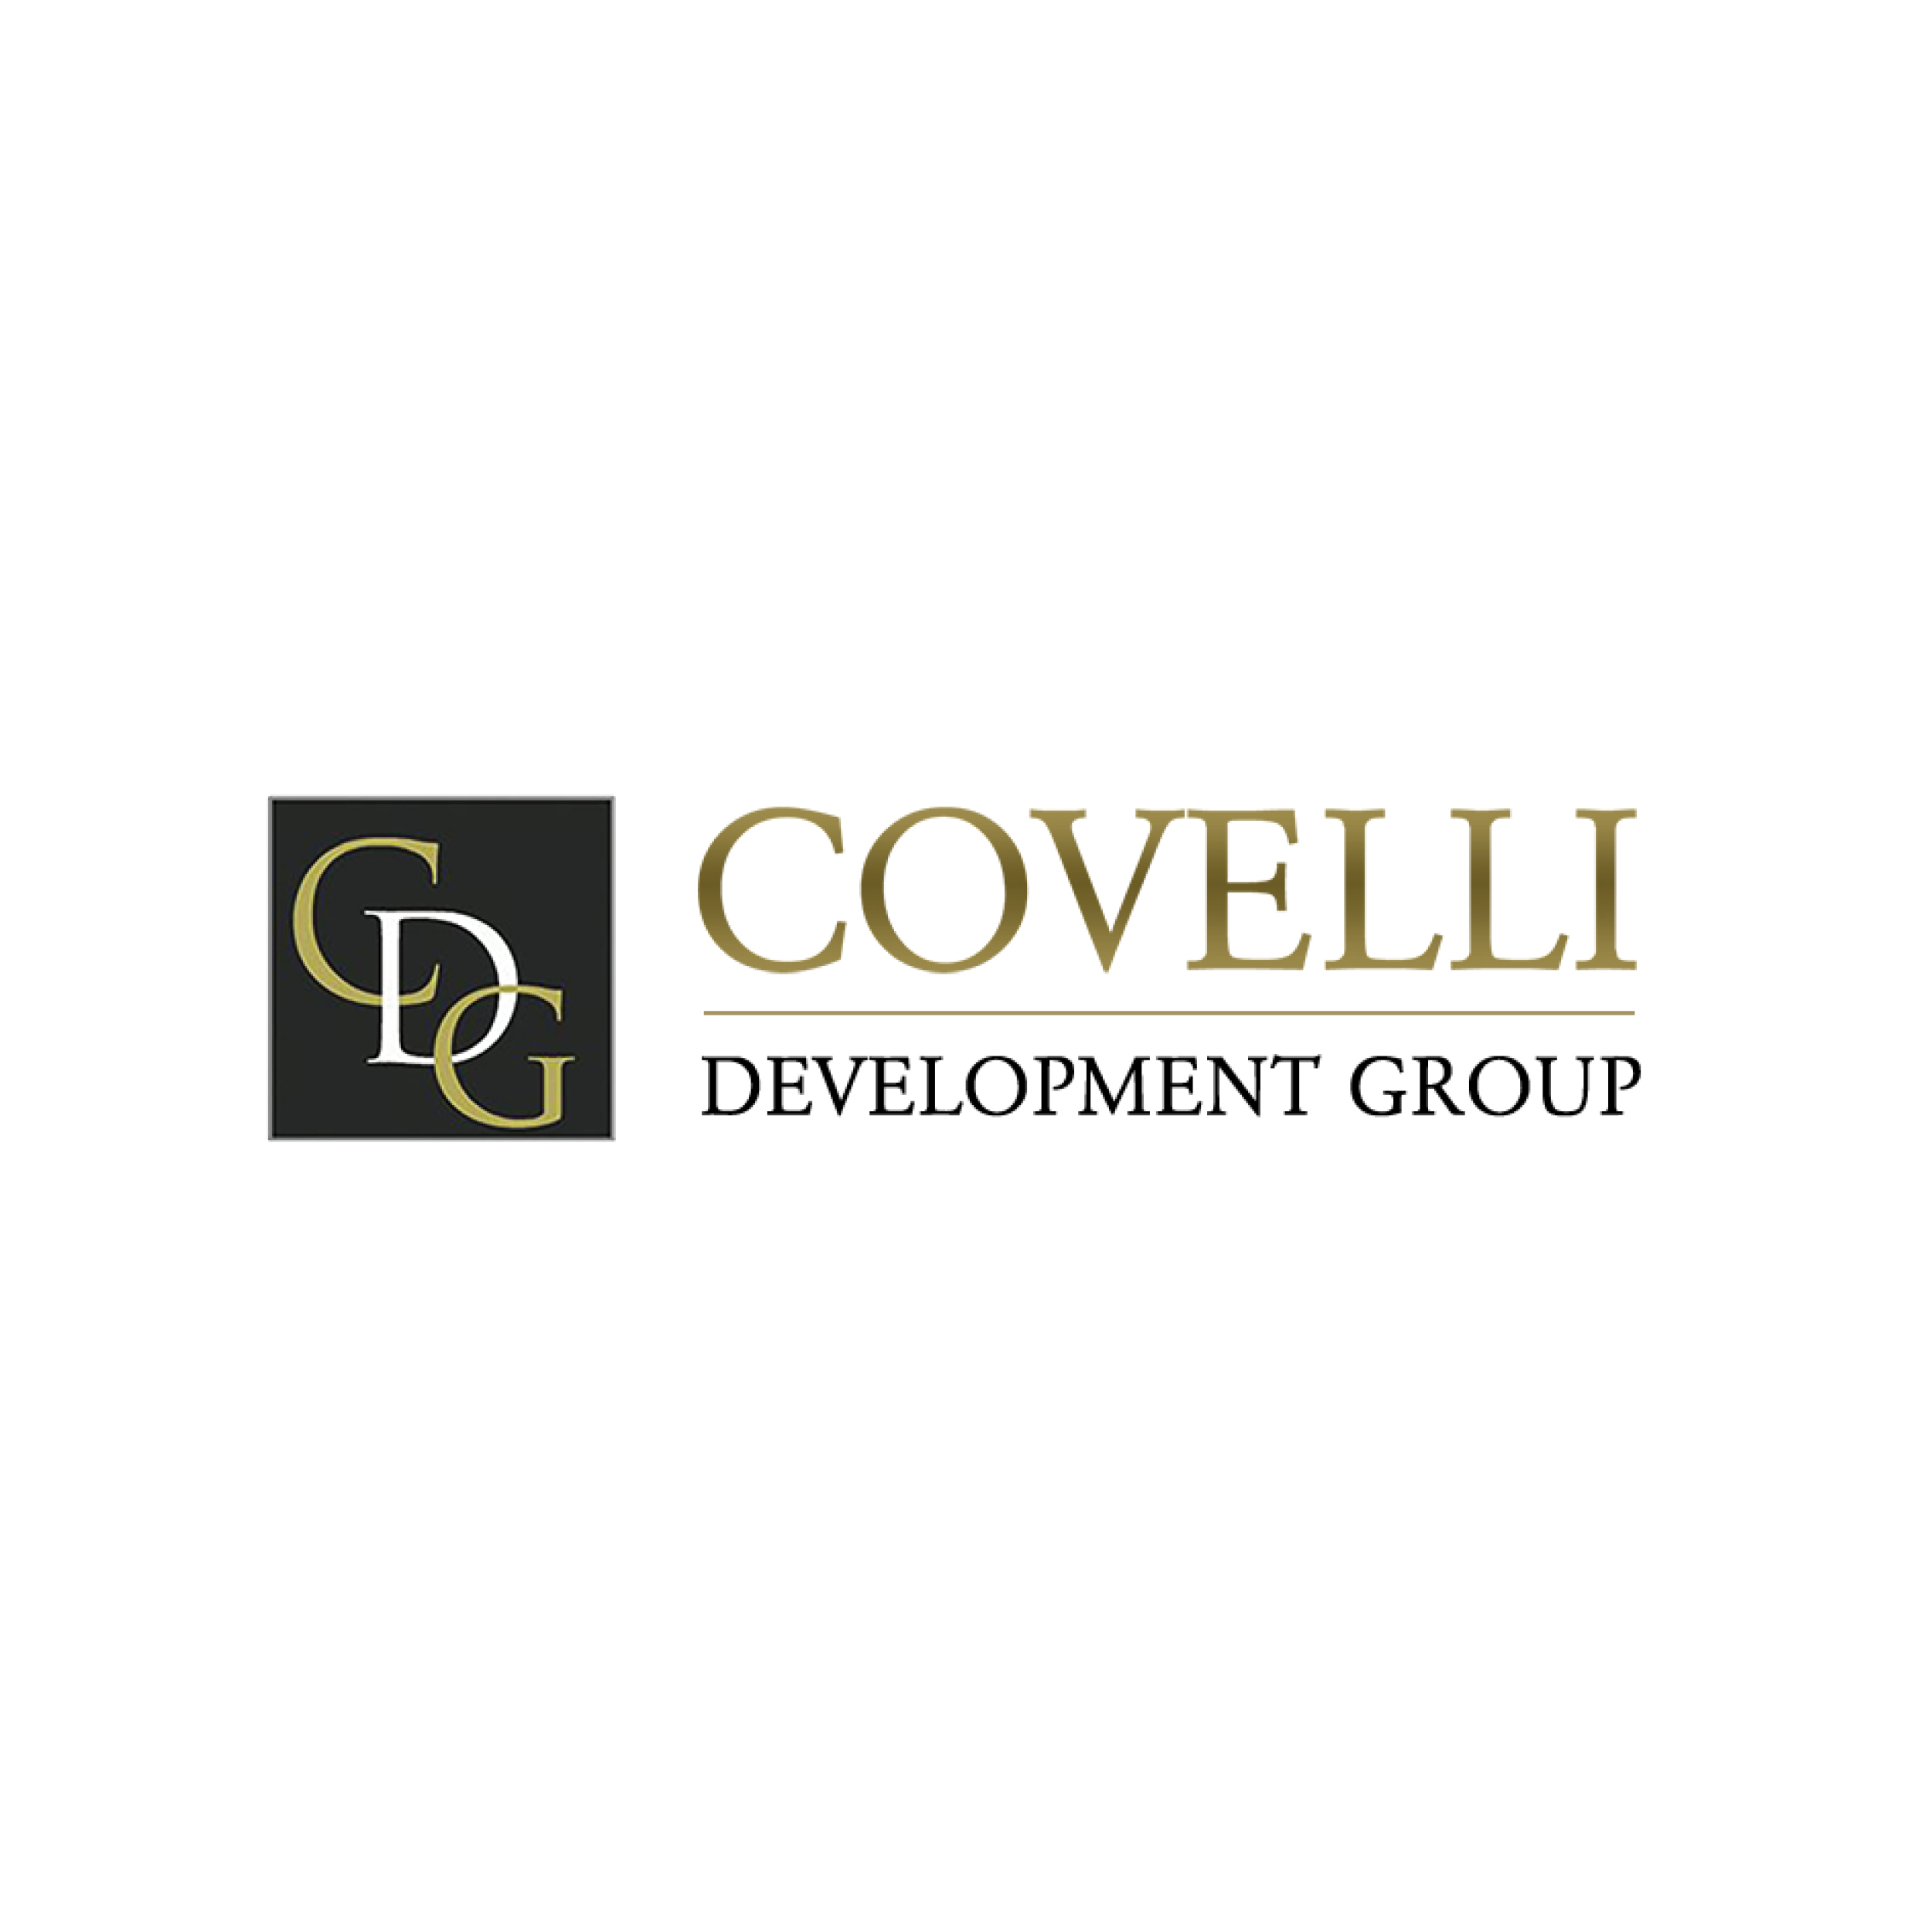 Covelli Development Group